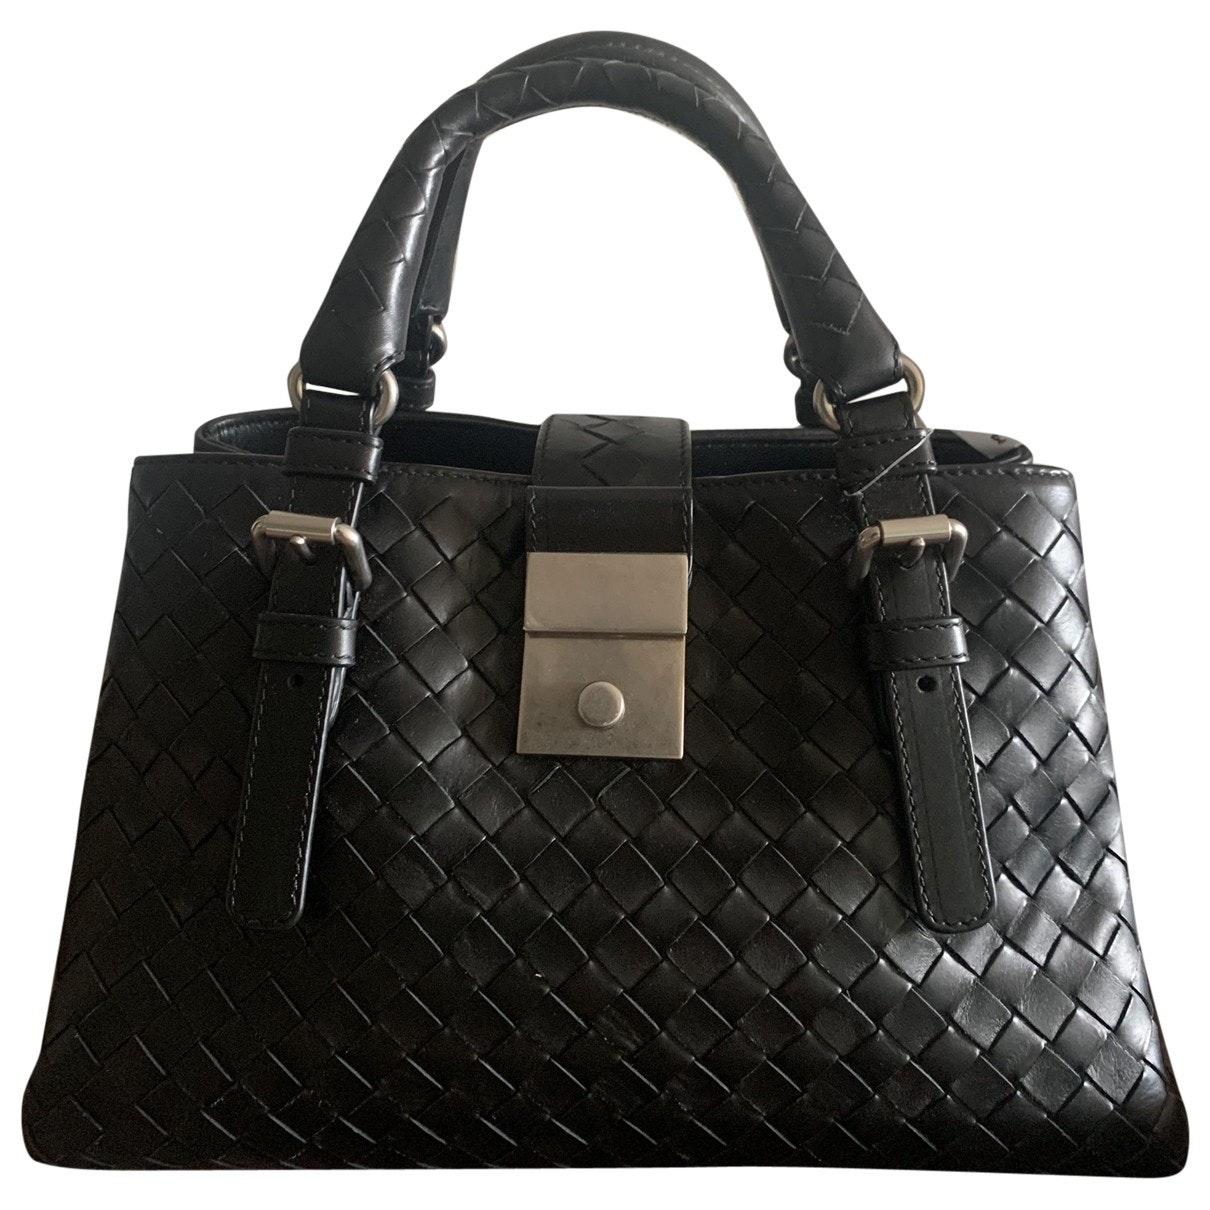 Bottega Veneta Roma Leather Handbag in Black - Lyst